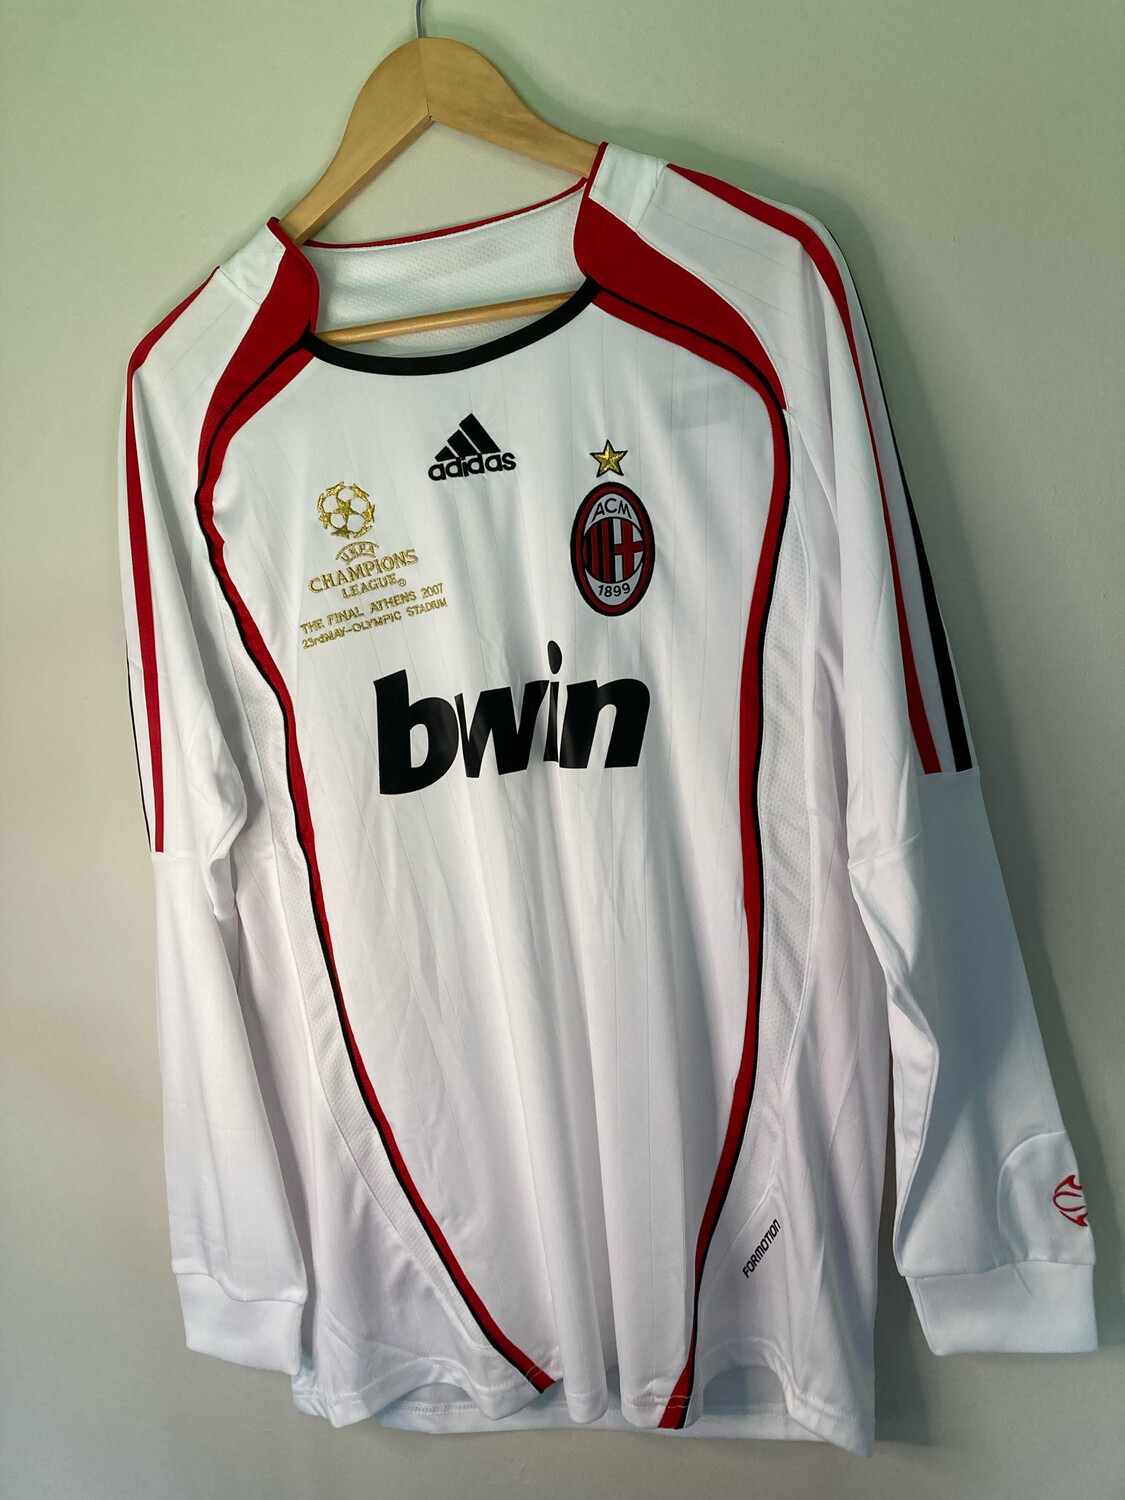 2006-07 AC Milan Athens Champions League final jersey